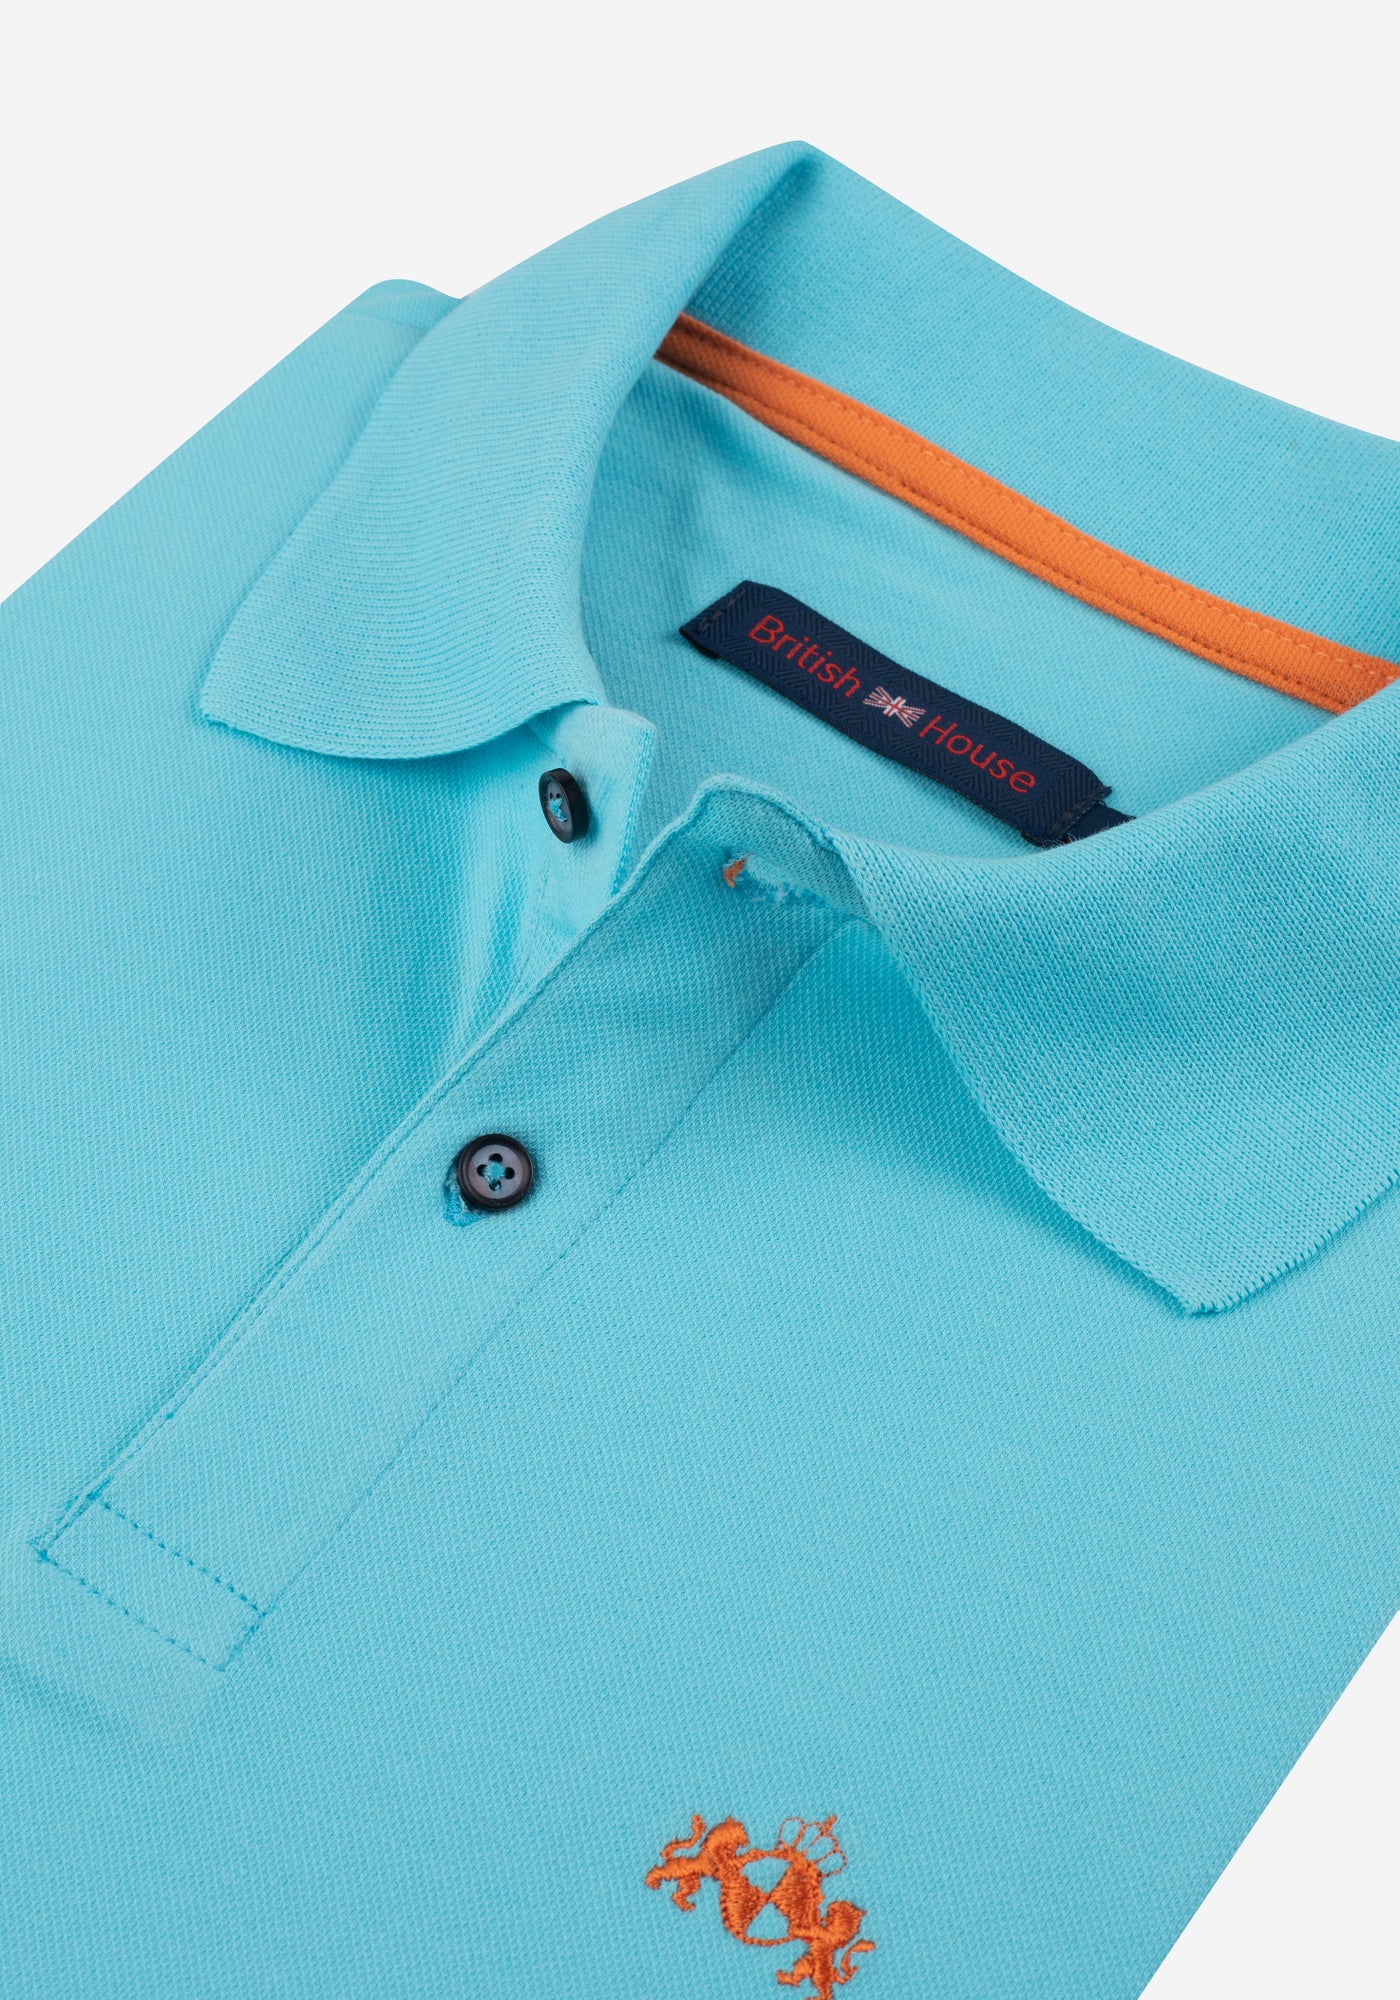 Turquoise Cotton Lycra Polo Shirt